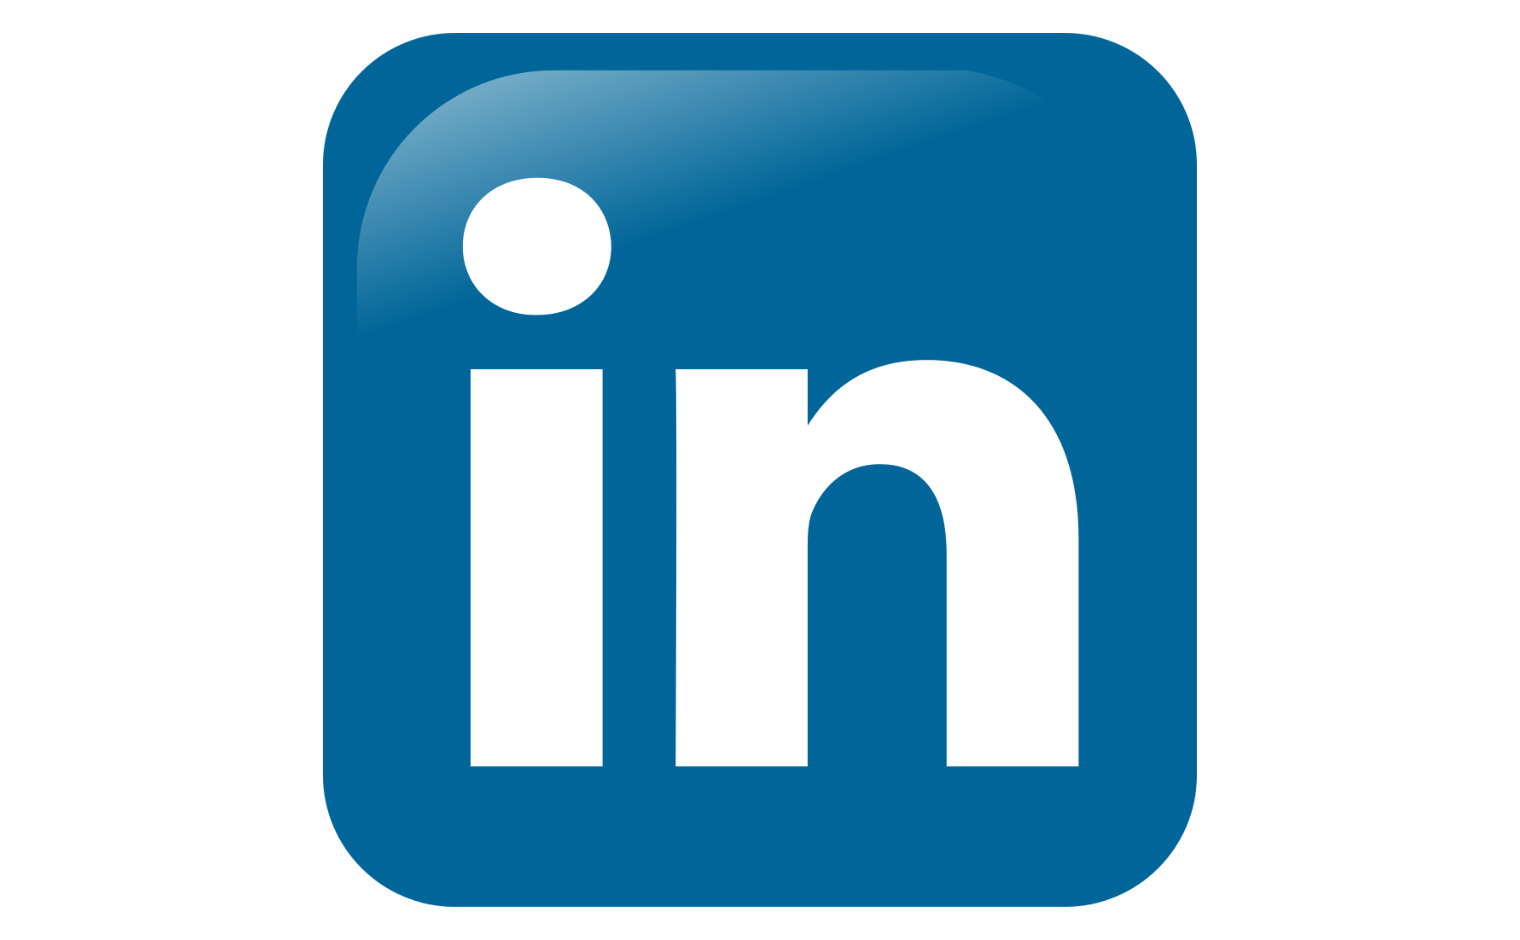 Groei goede doelen op LinkedIn stabiel en vooral snel - Vakblad fondsenwerving